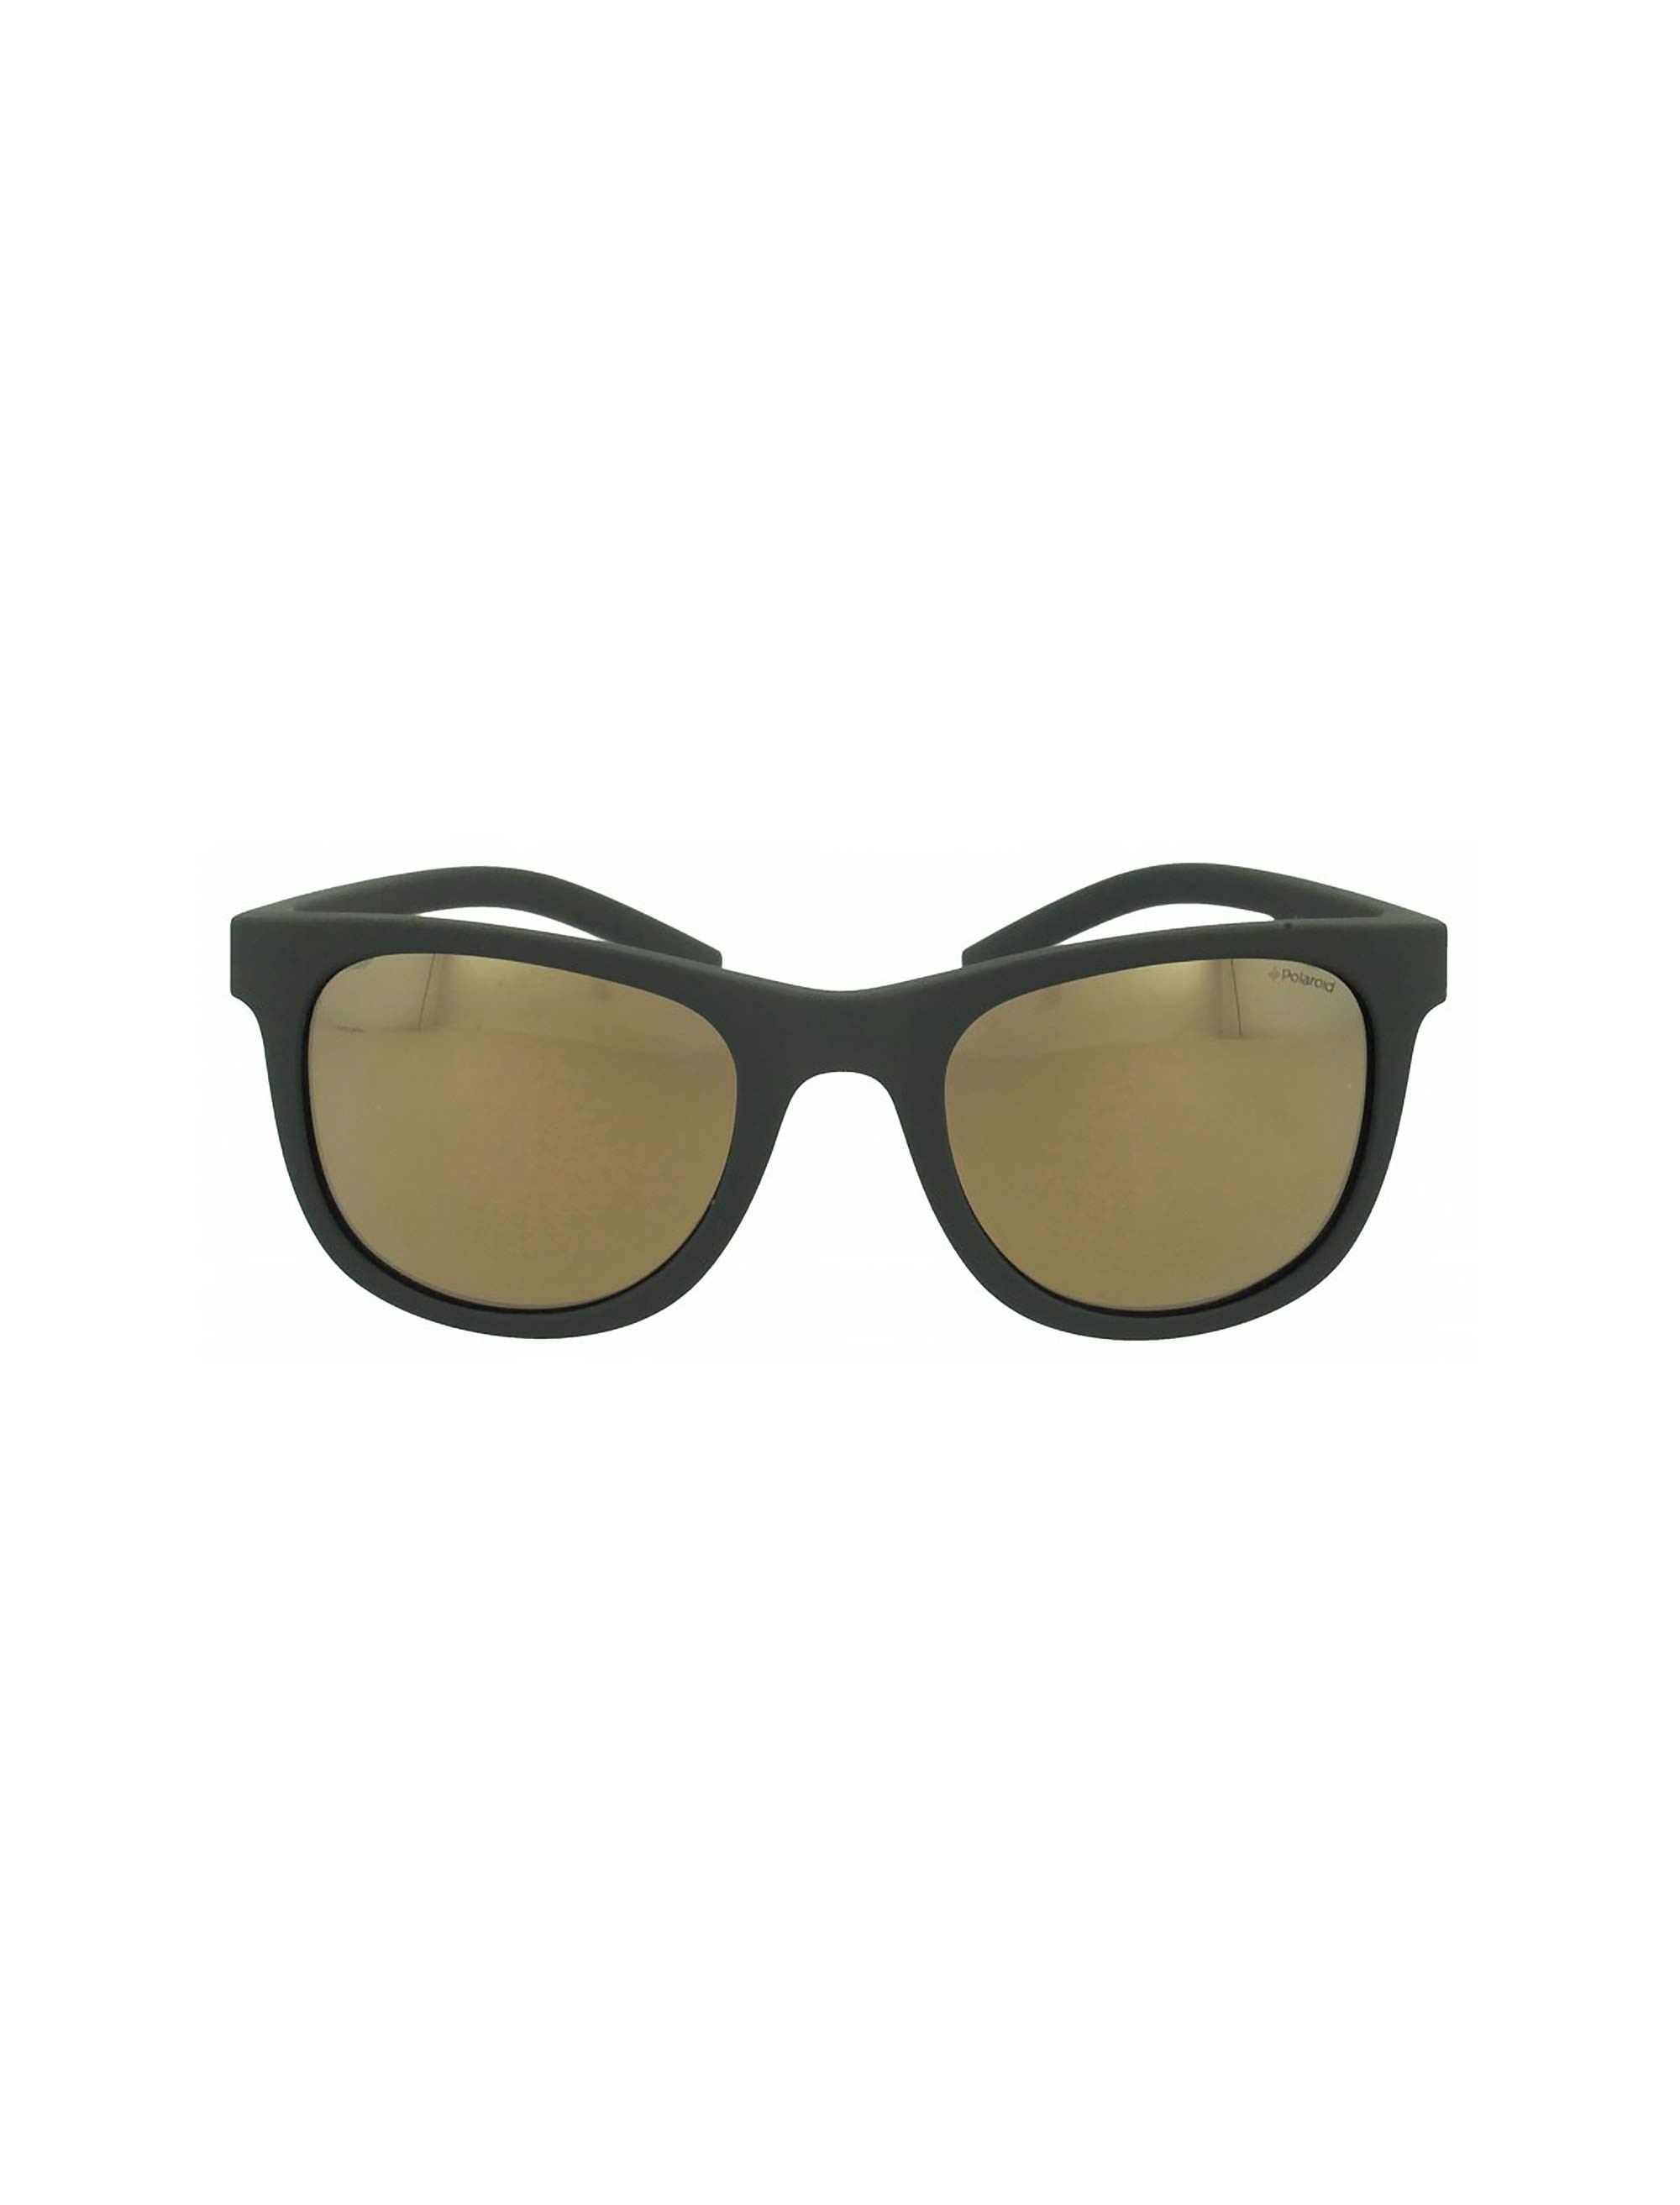 عینک آفتابی مستطیلی بزرگسال - پولاروید - سبز - 1